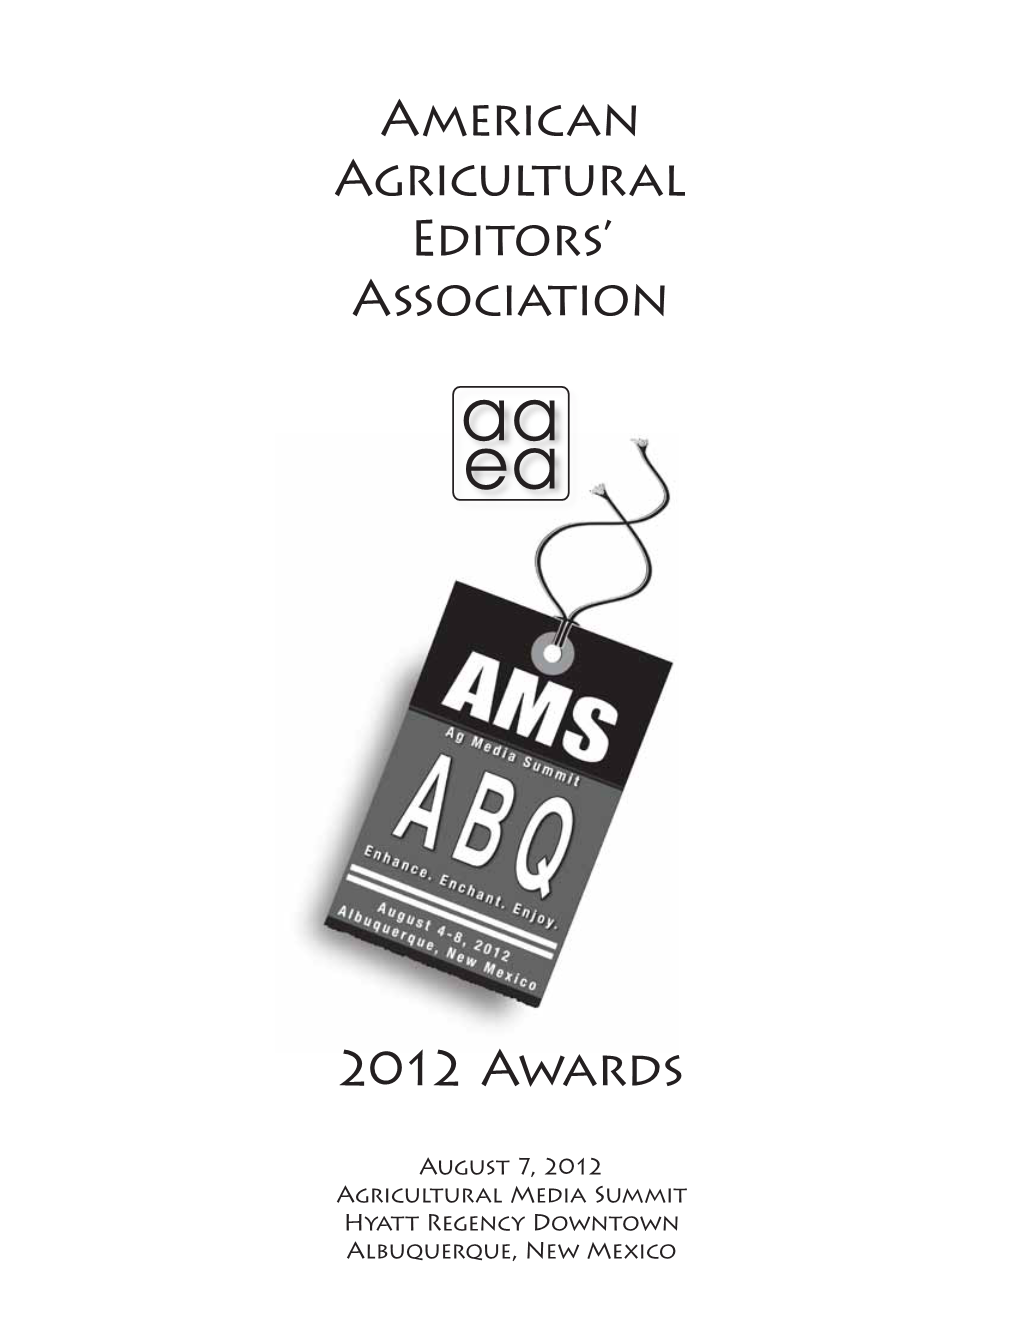 American Agricultural Editors' Association 2012 Awards